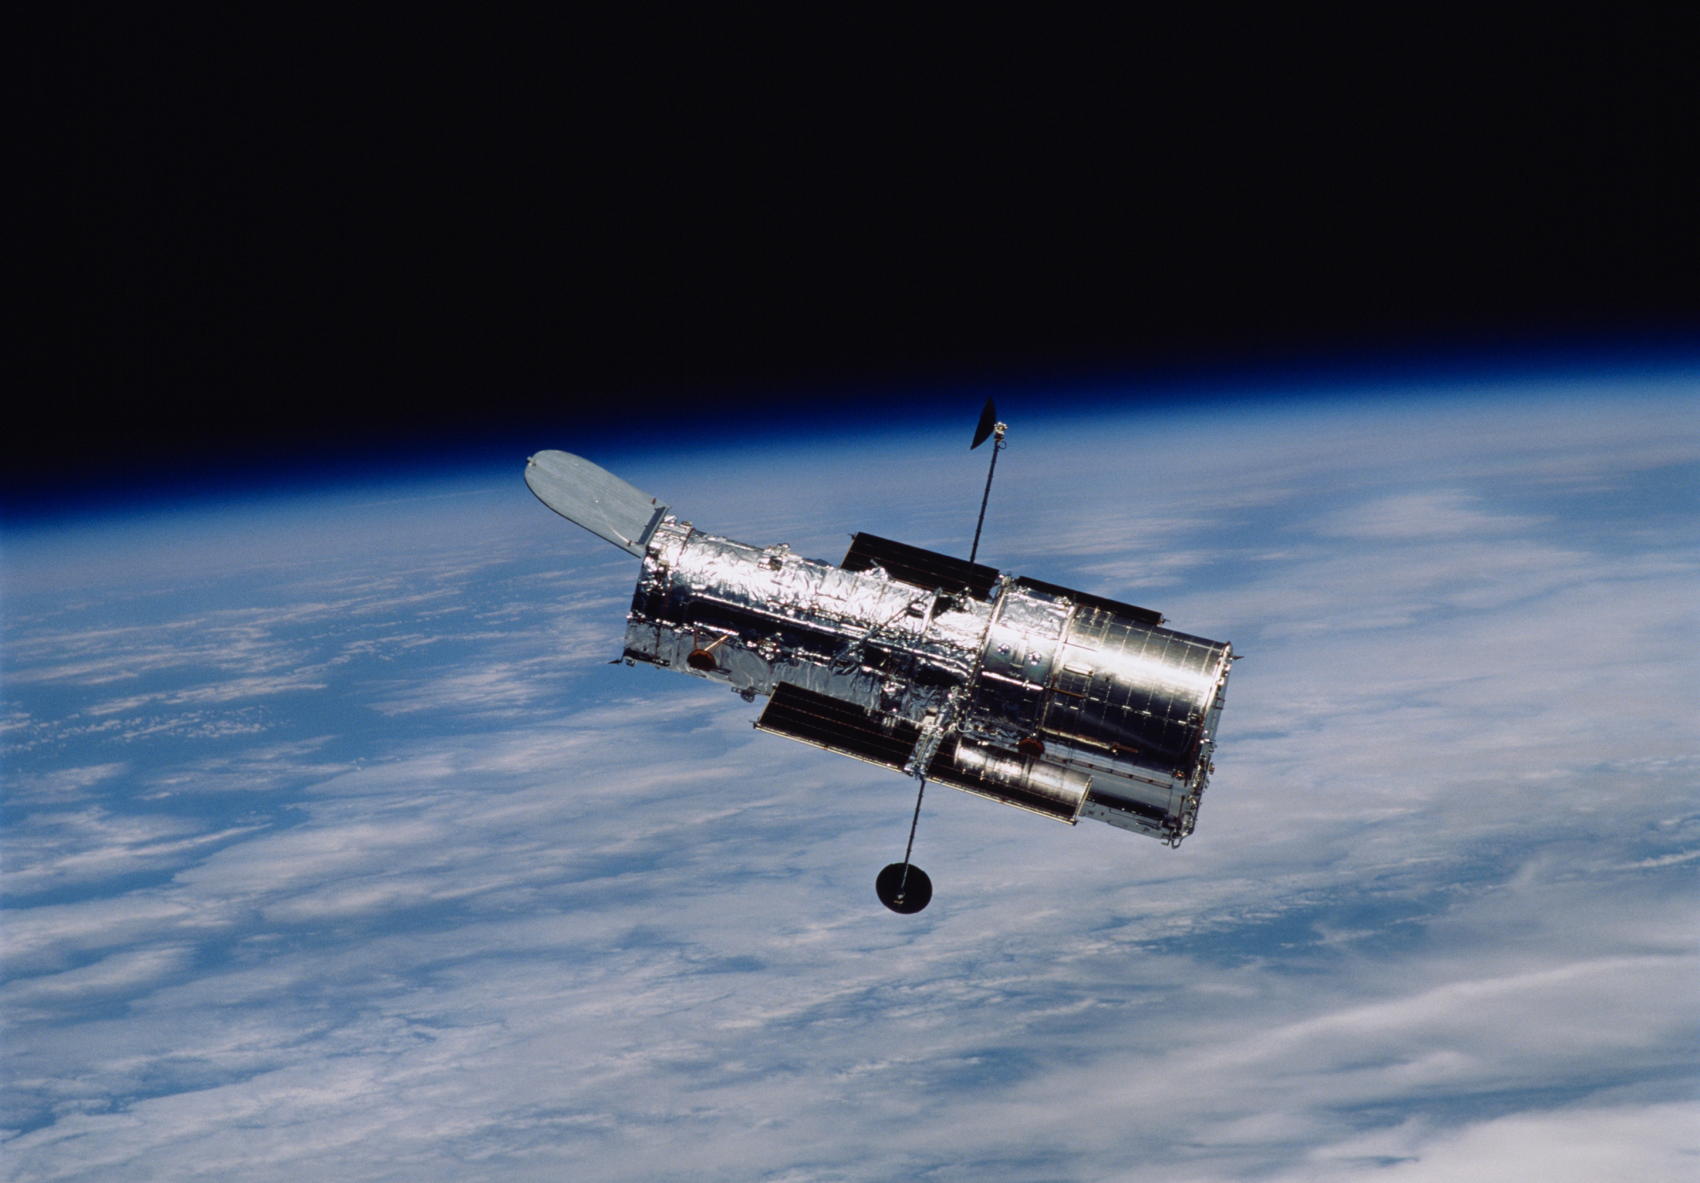 Hubble Space Telescope - Credit NASA